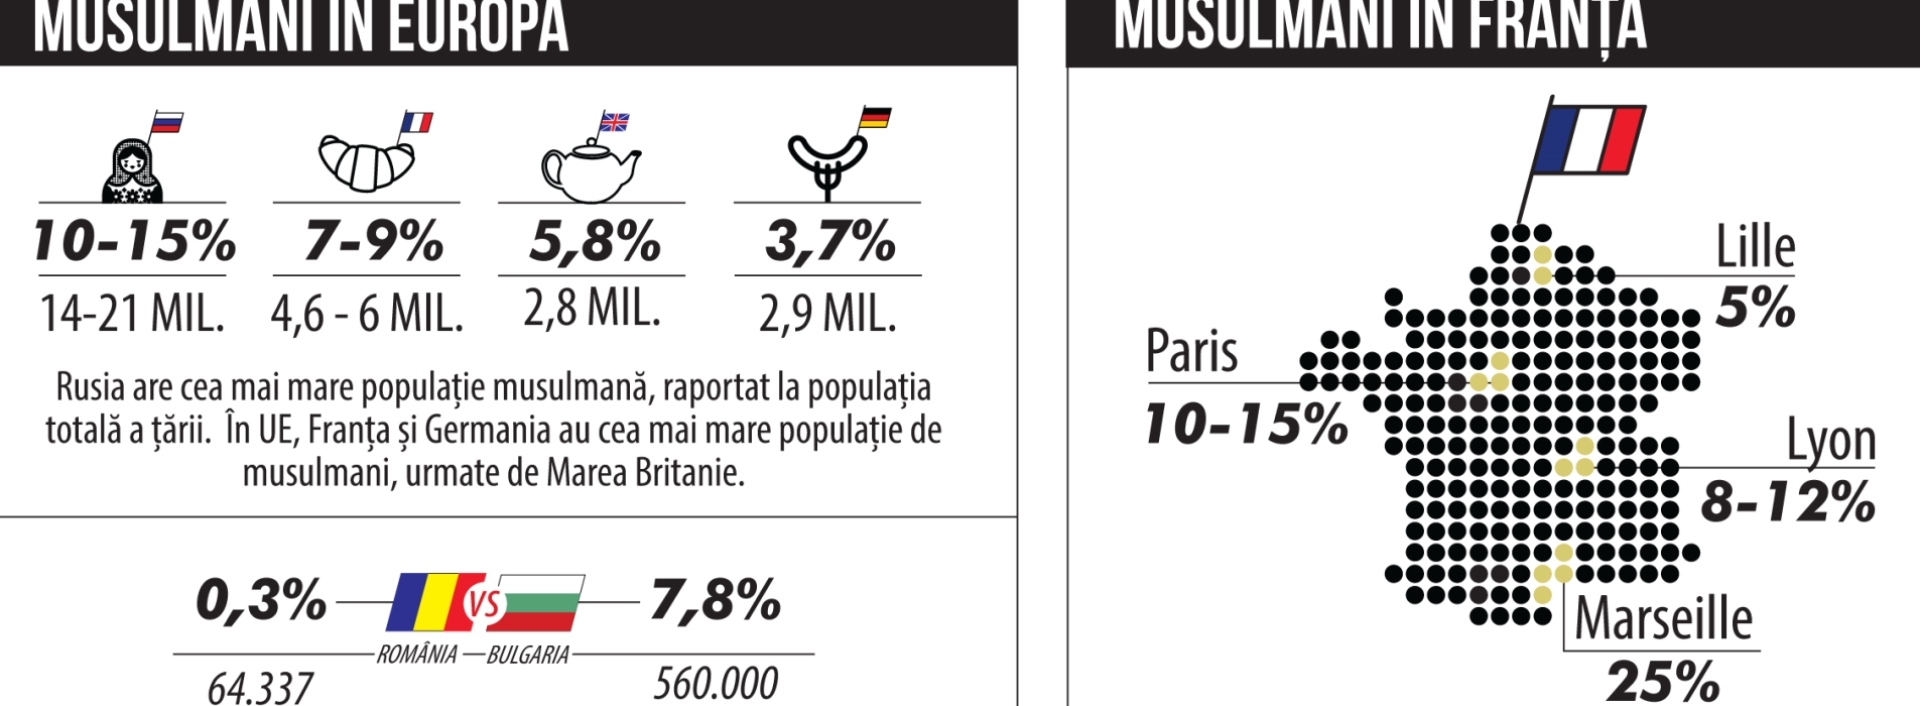 Infografic musulmani